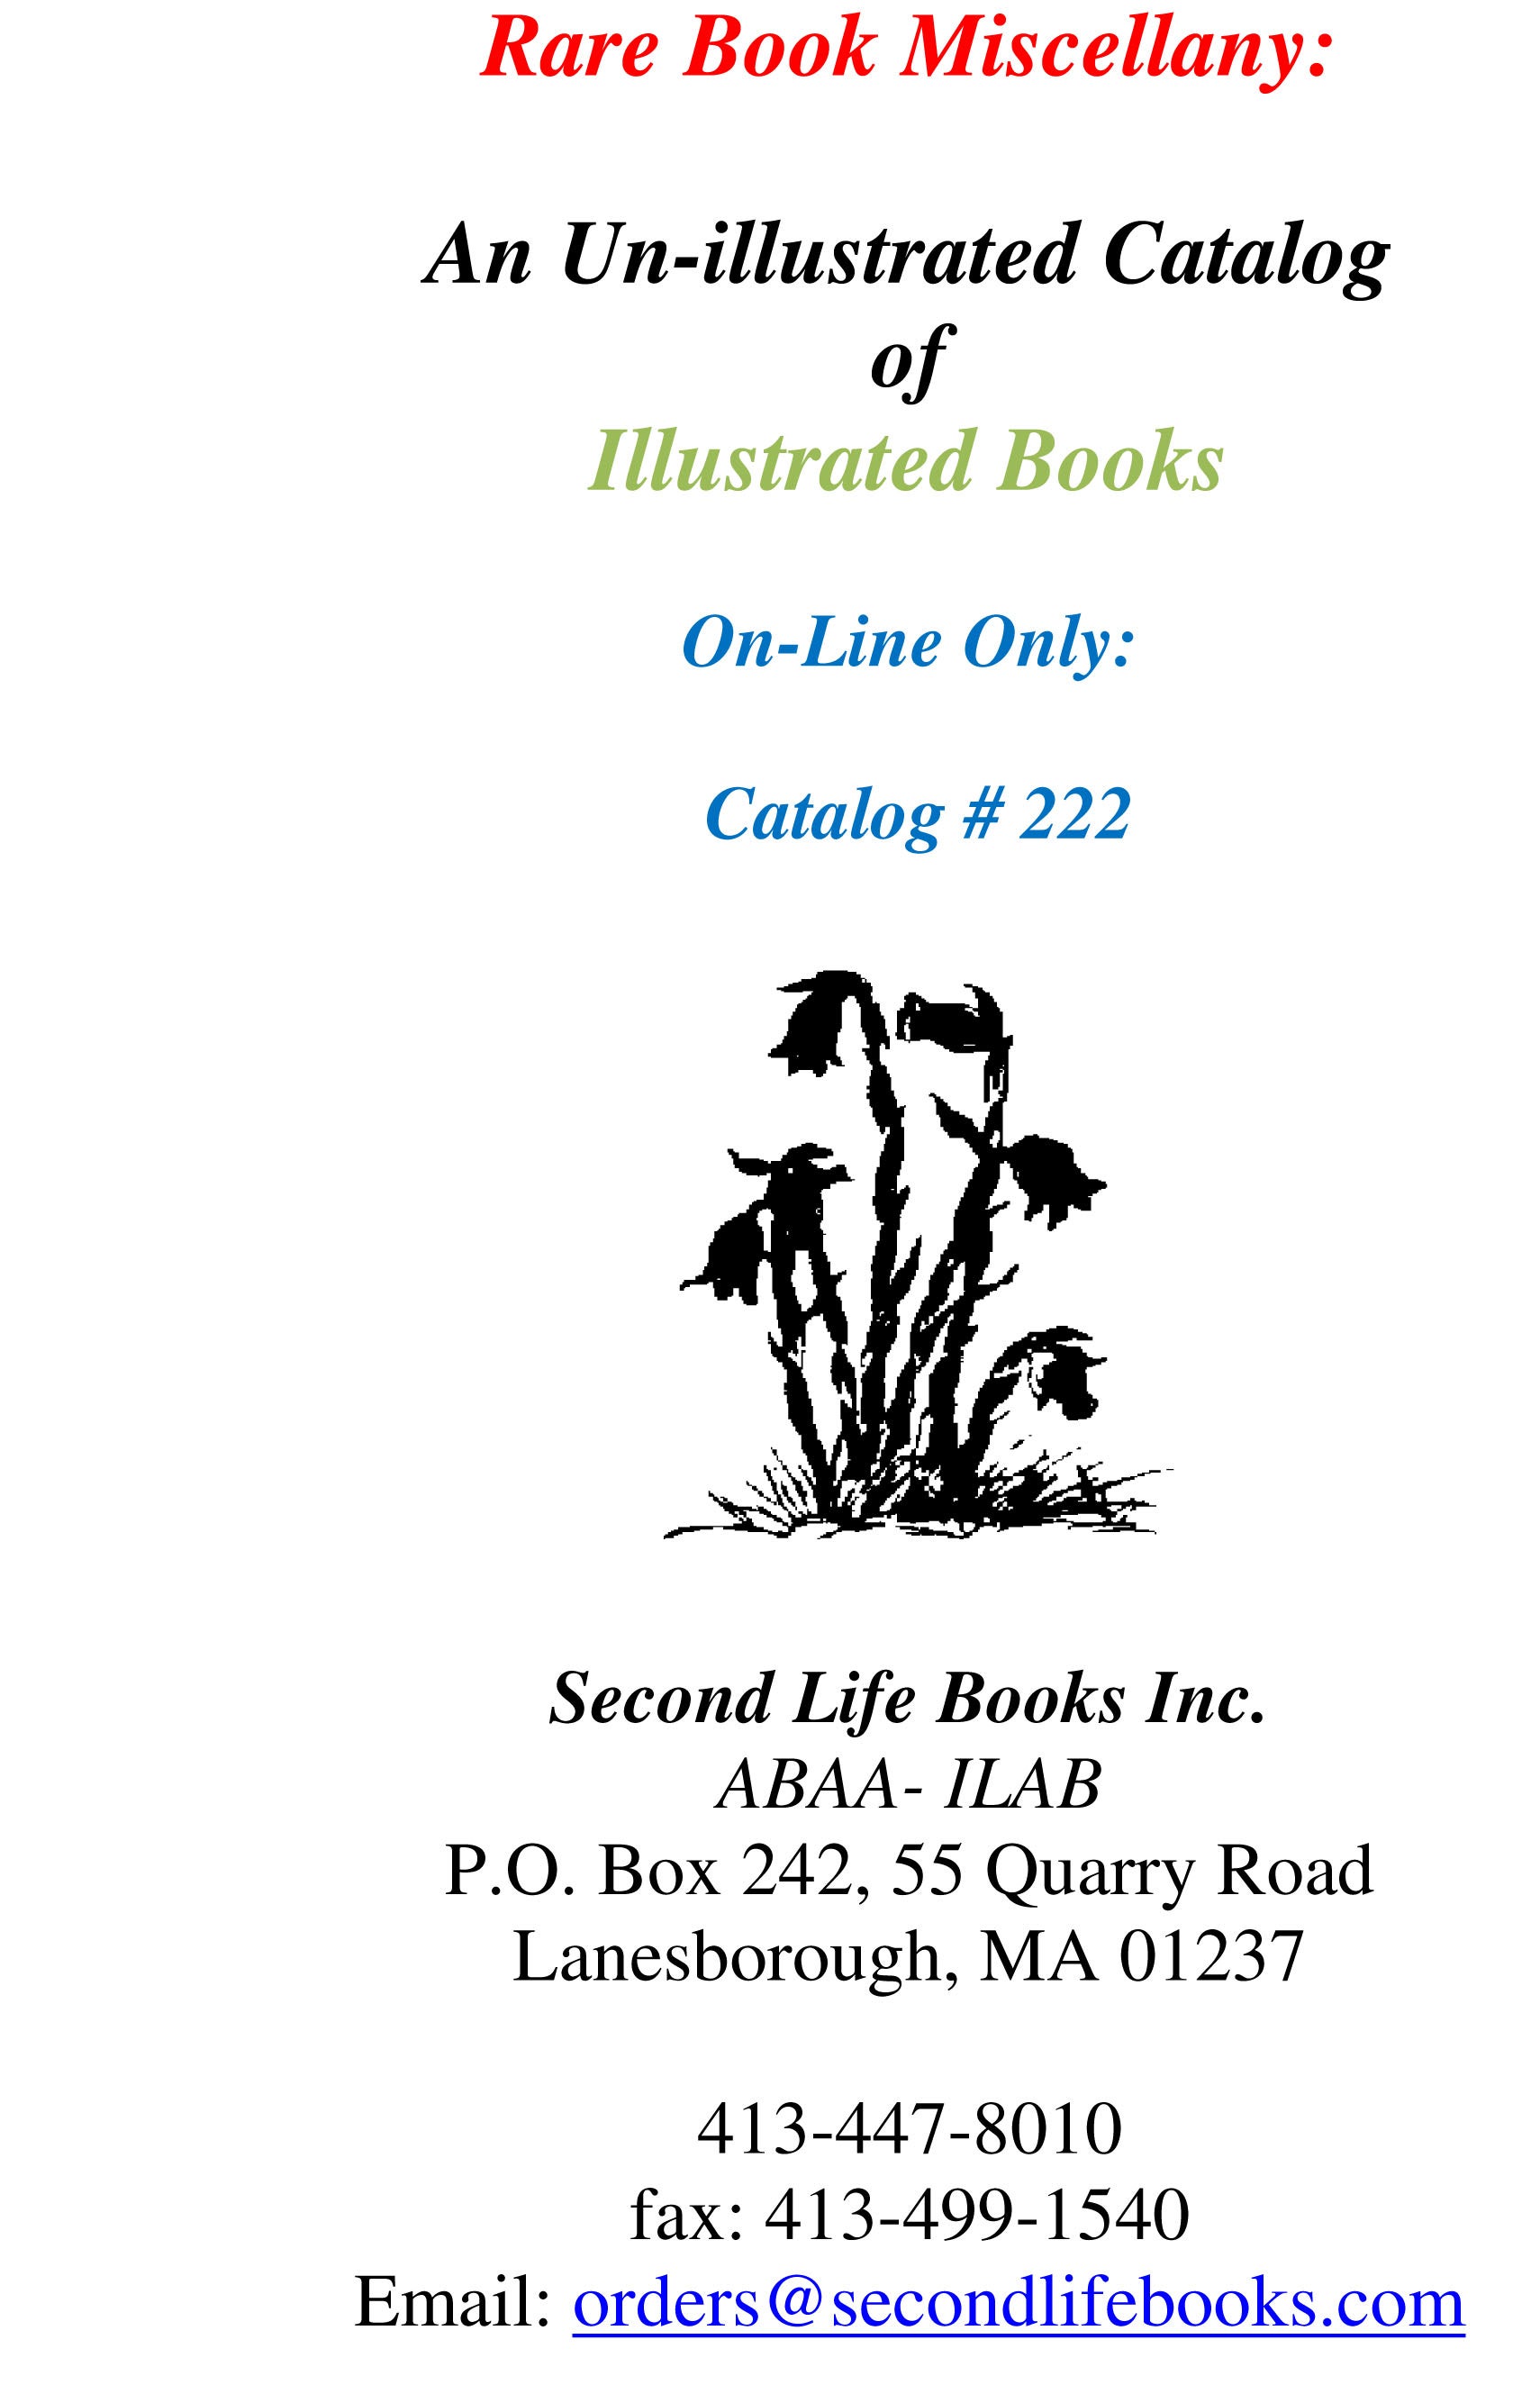 Catalog # 222: Illustrated Books